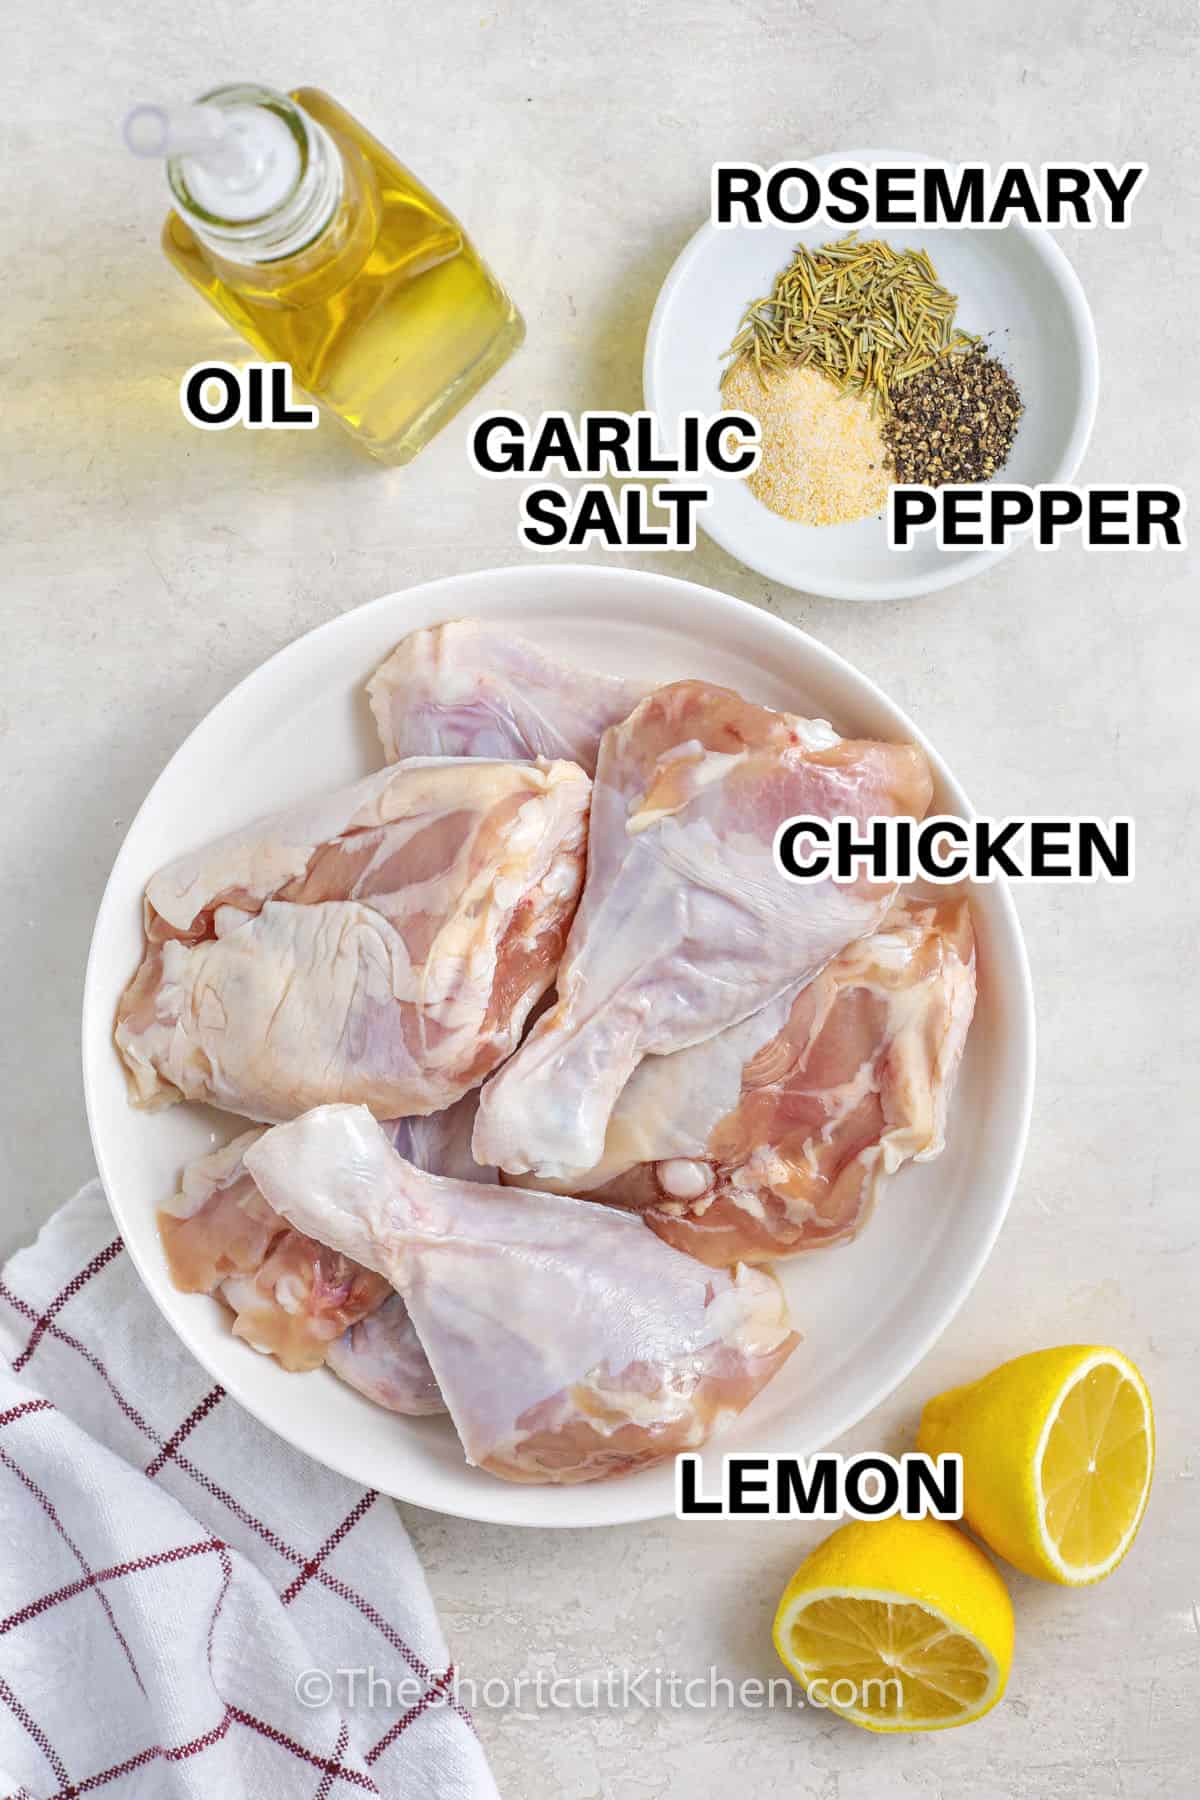 oil , garlic salt , pepper , rosemary , chicken and lemon to make Lemon Rosemary Chicken with labels